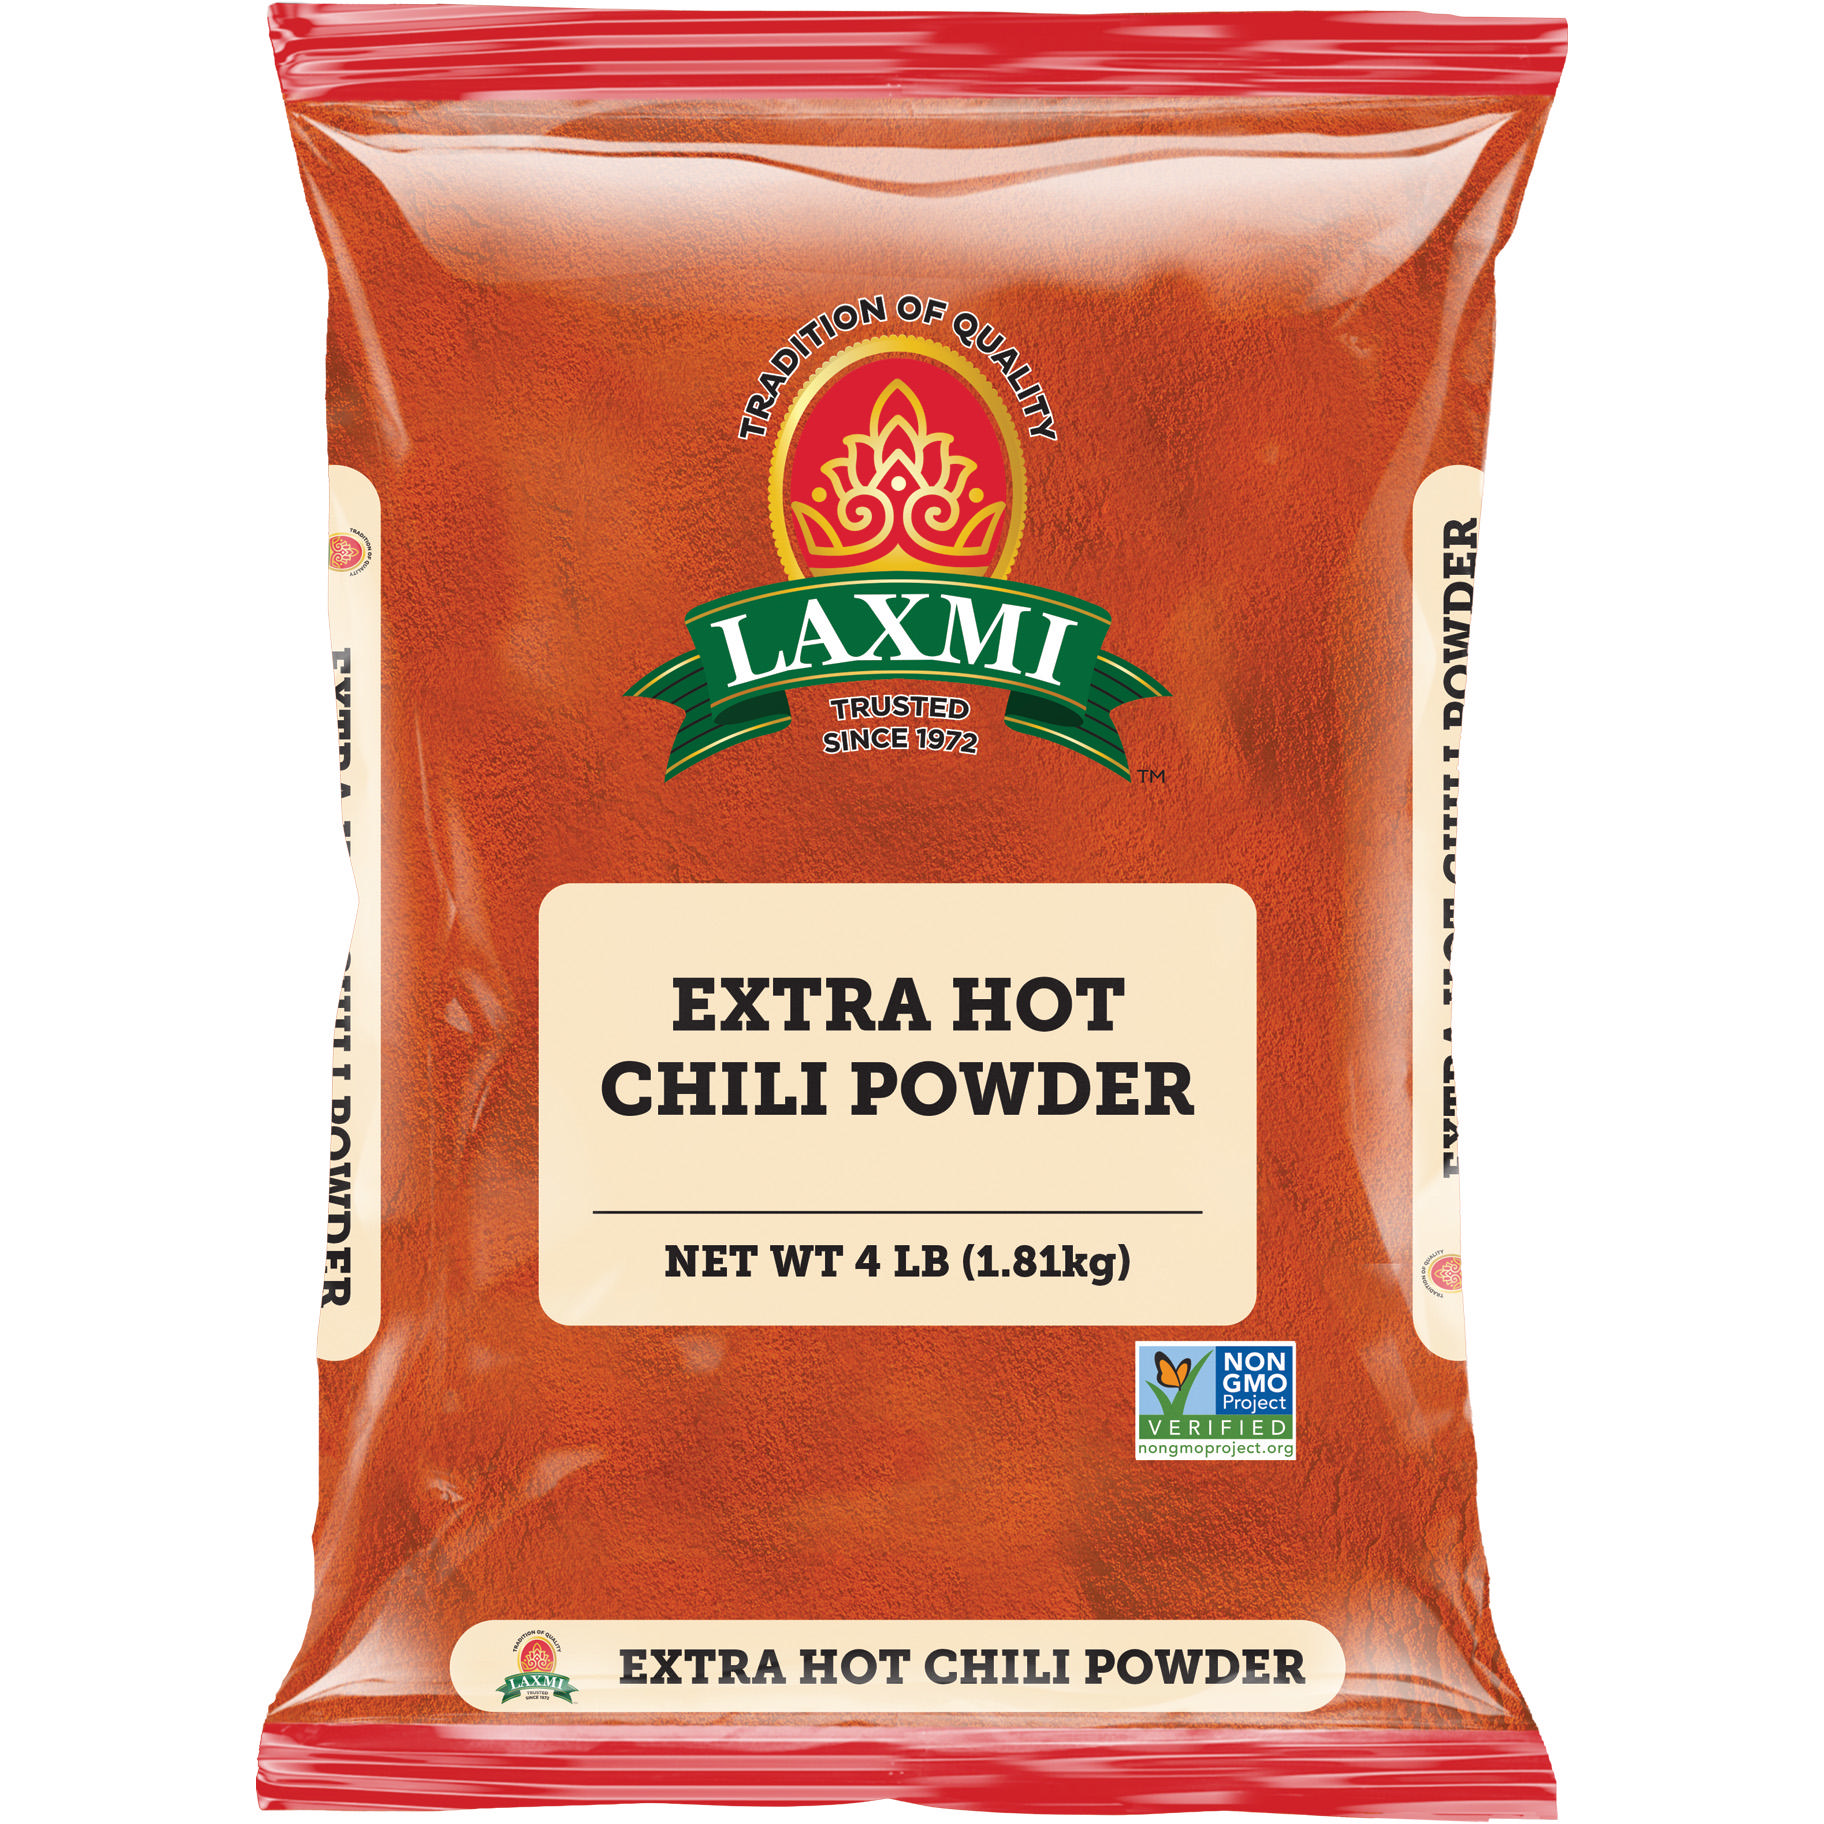 Pack of 3 - Laxmi Extra Hot Chilli Powder - 4 Lb (1.81 Kg)